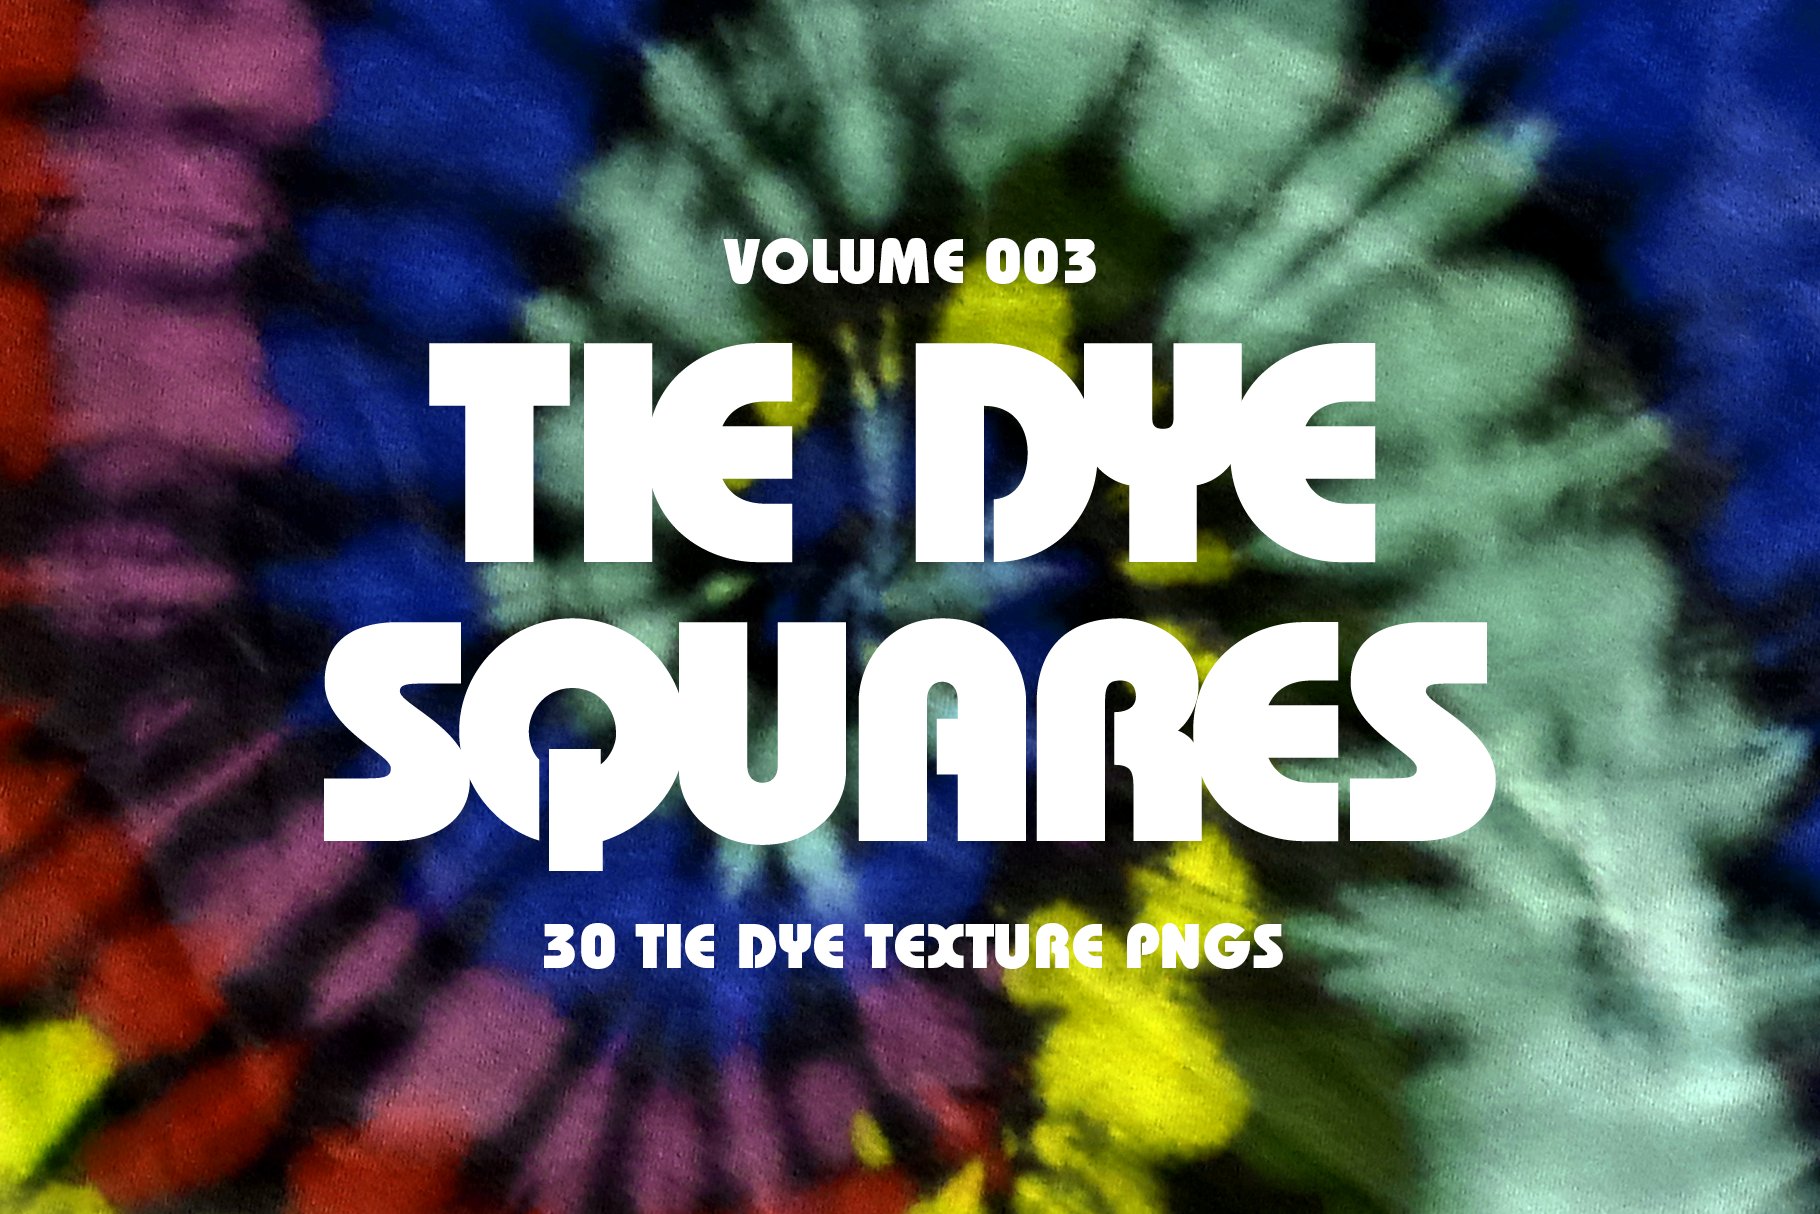 Tie Dye Squares Vol 003 cover image.